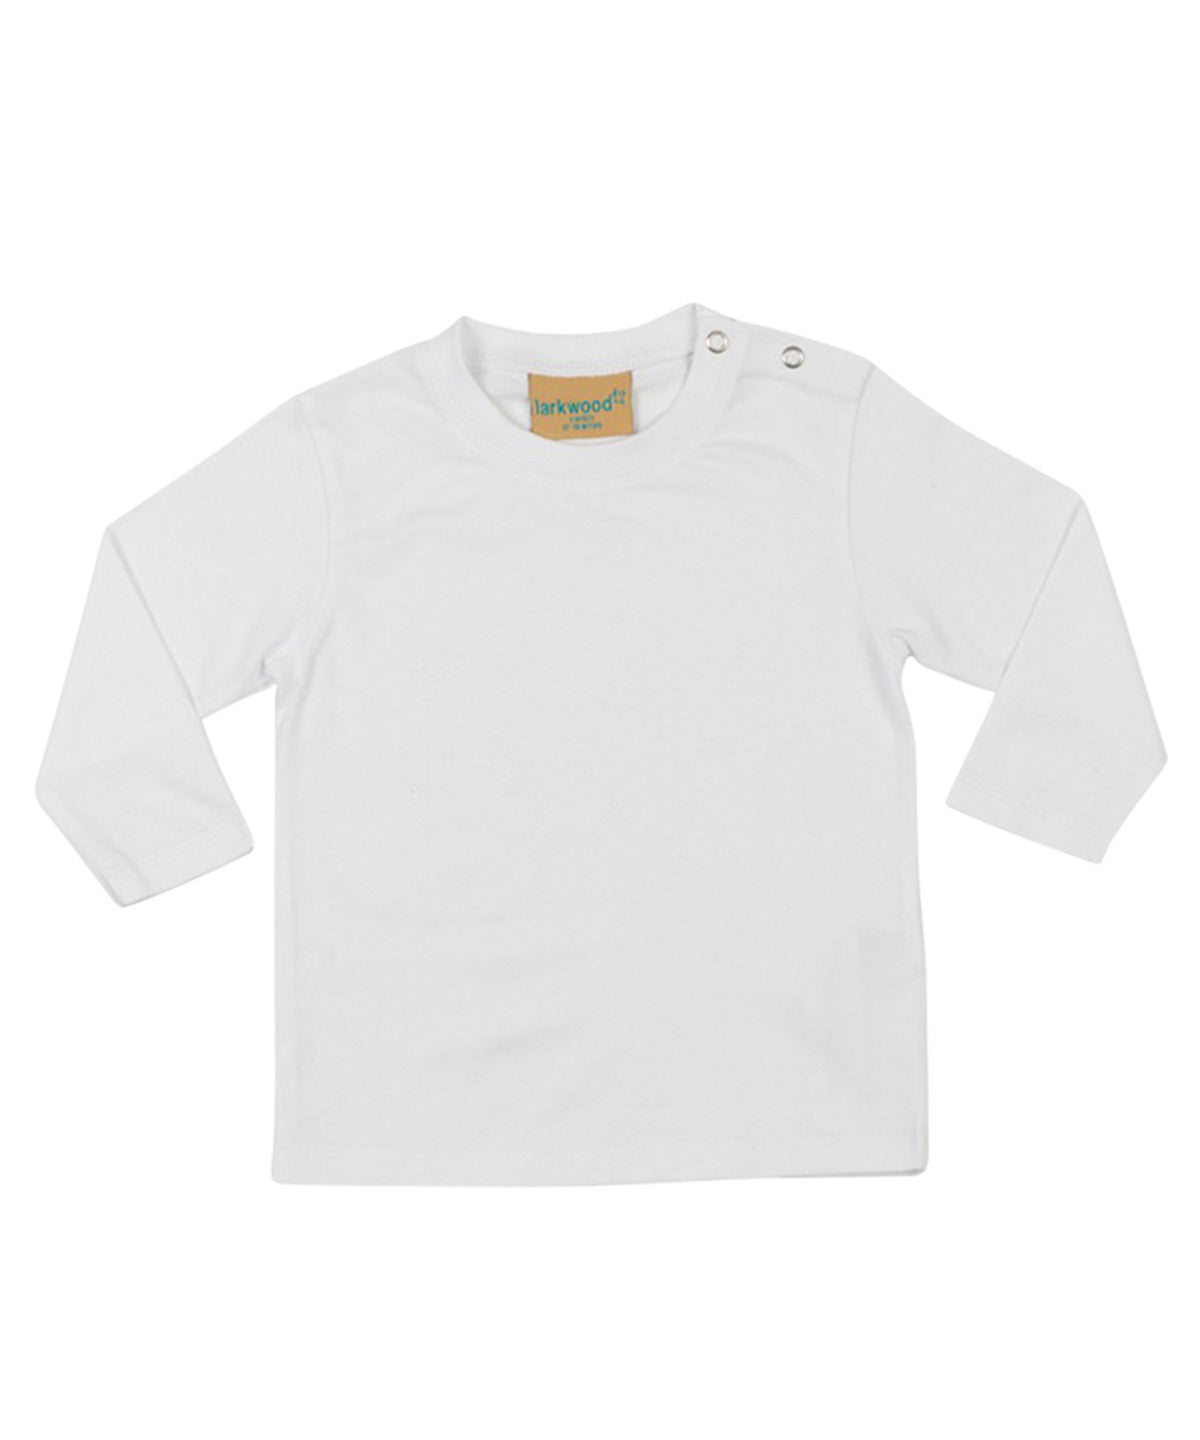 Personalised T-Shirts - Navy Larkwood Long-sleeved t-shirt